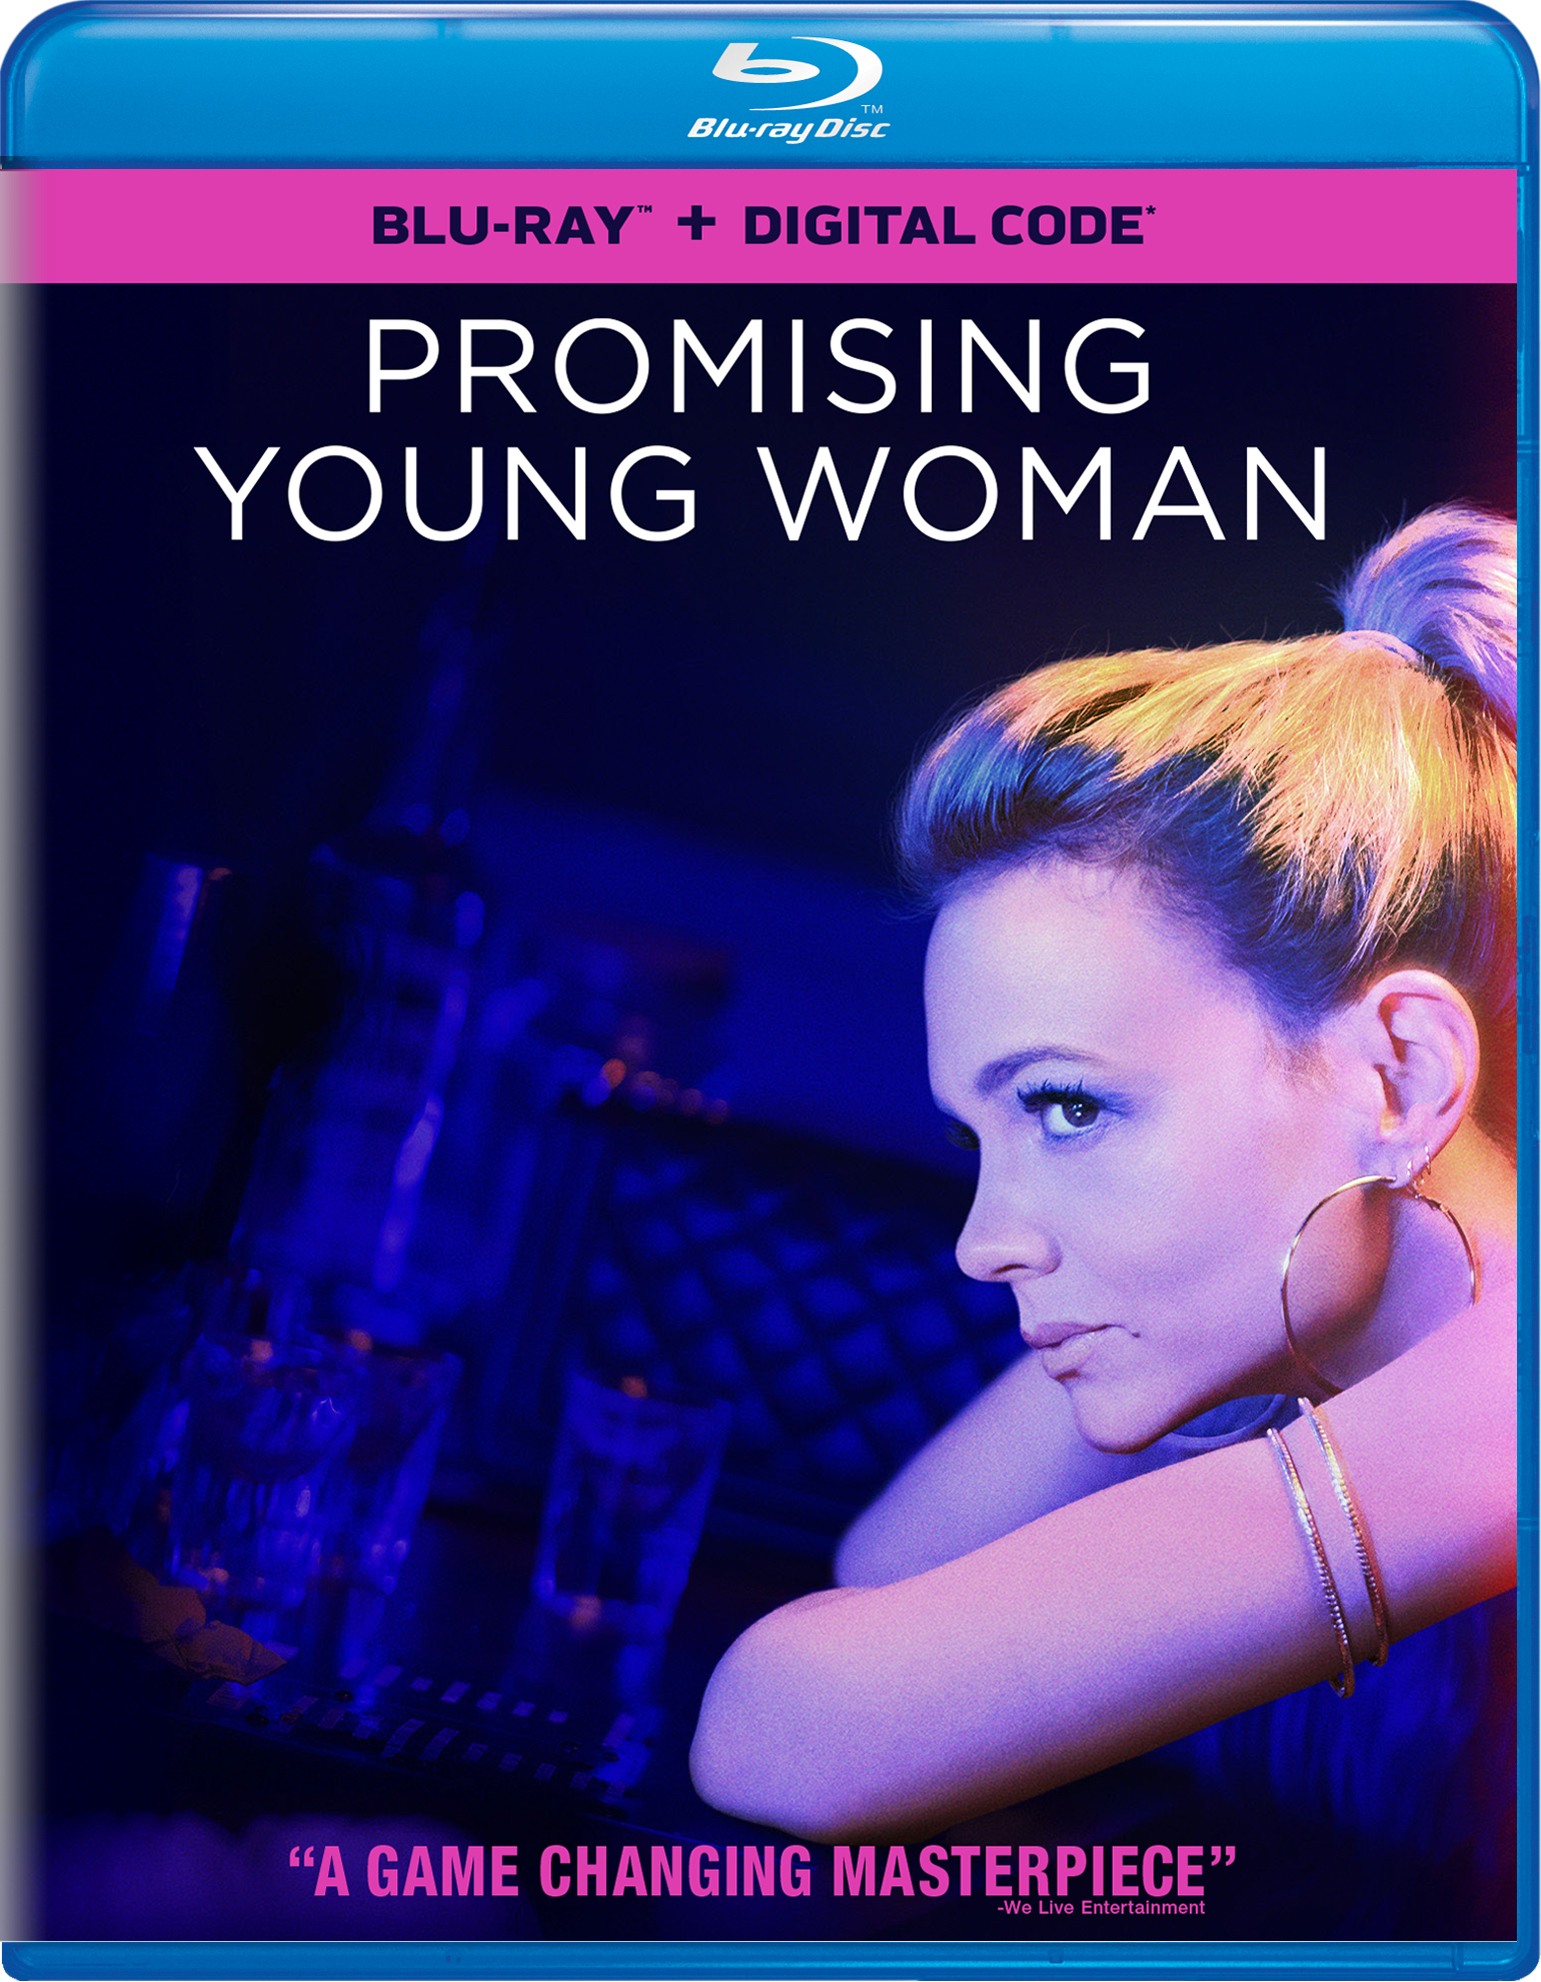 Promising Young Woman (Blu-ray + Digital Copy) - Blu-ray [ 2020 ]  - Comedy Movies On Blu-ray - Movies On GRUV